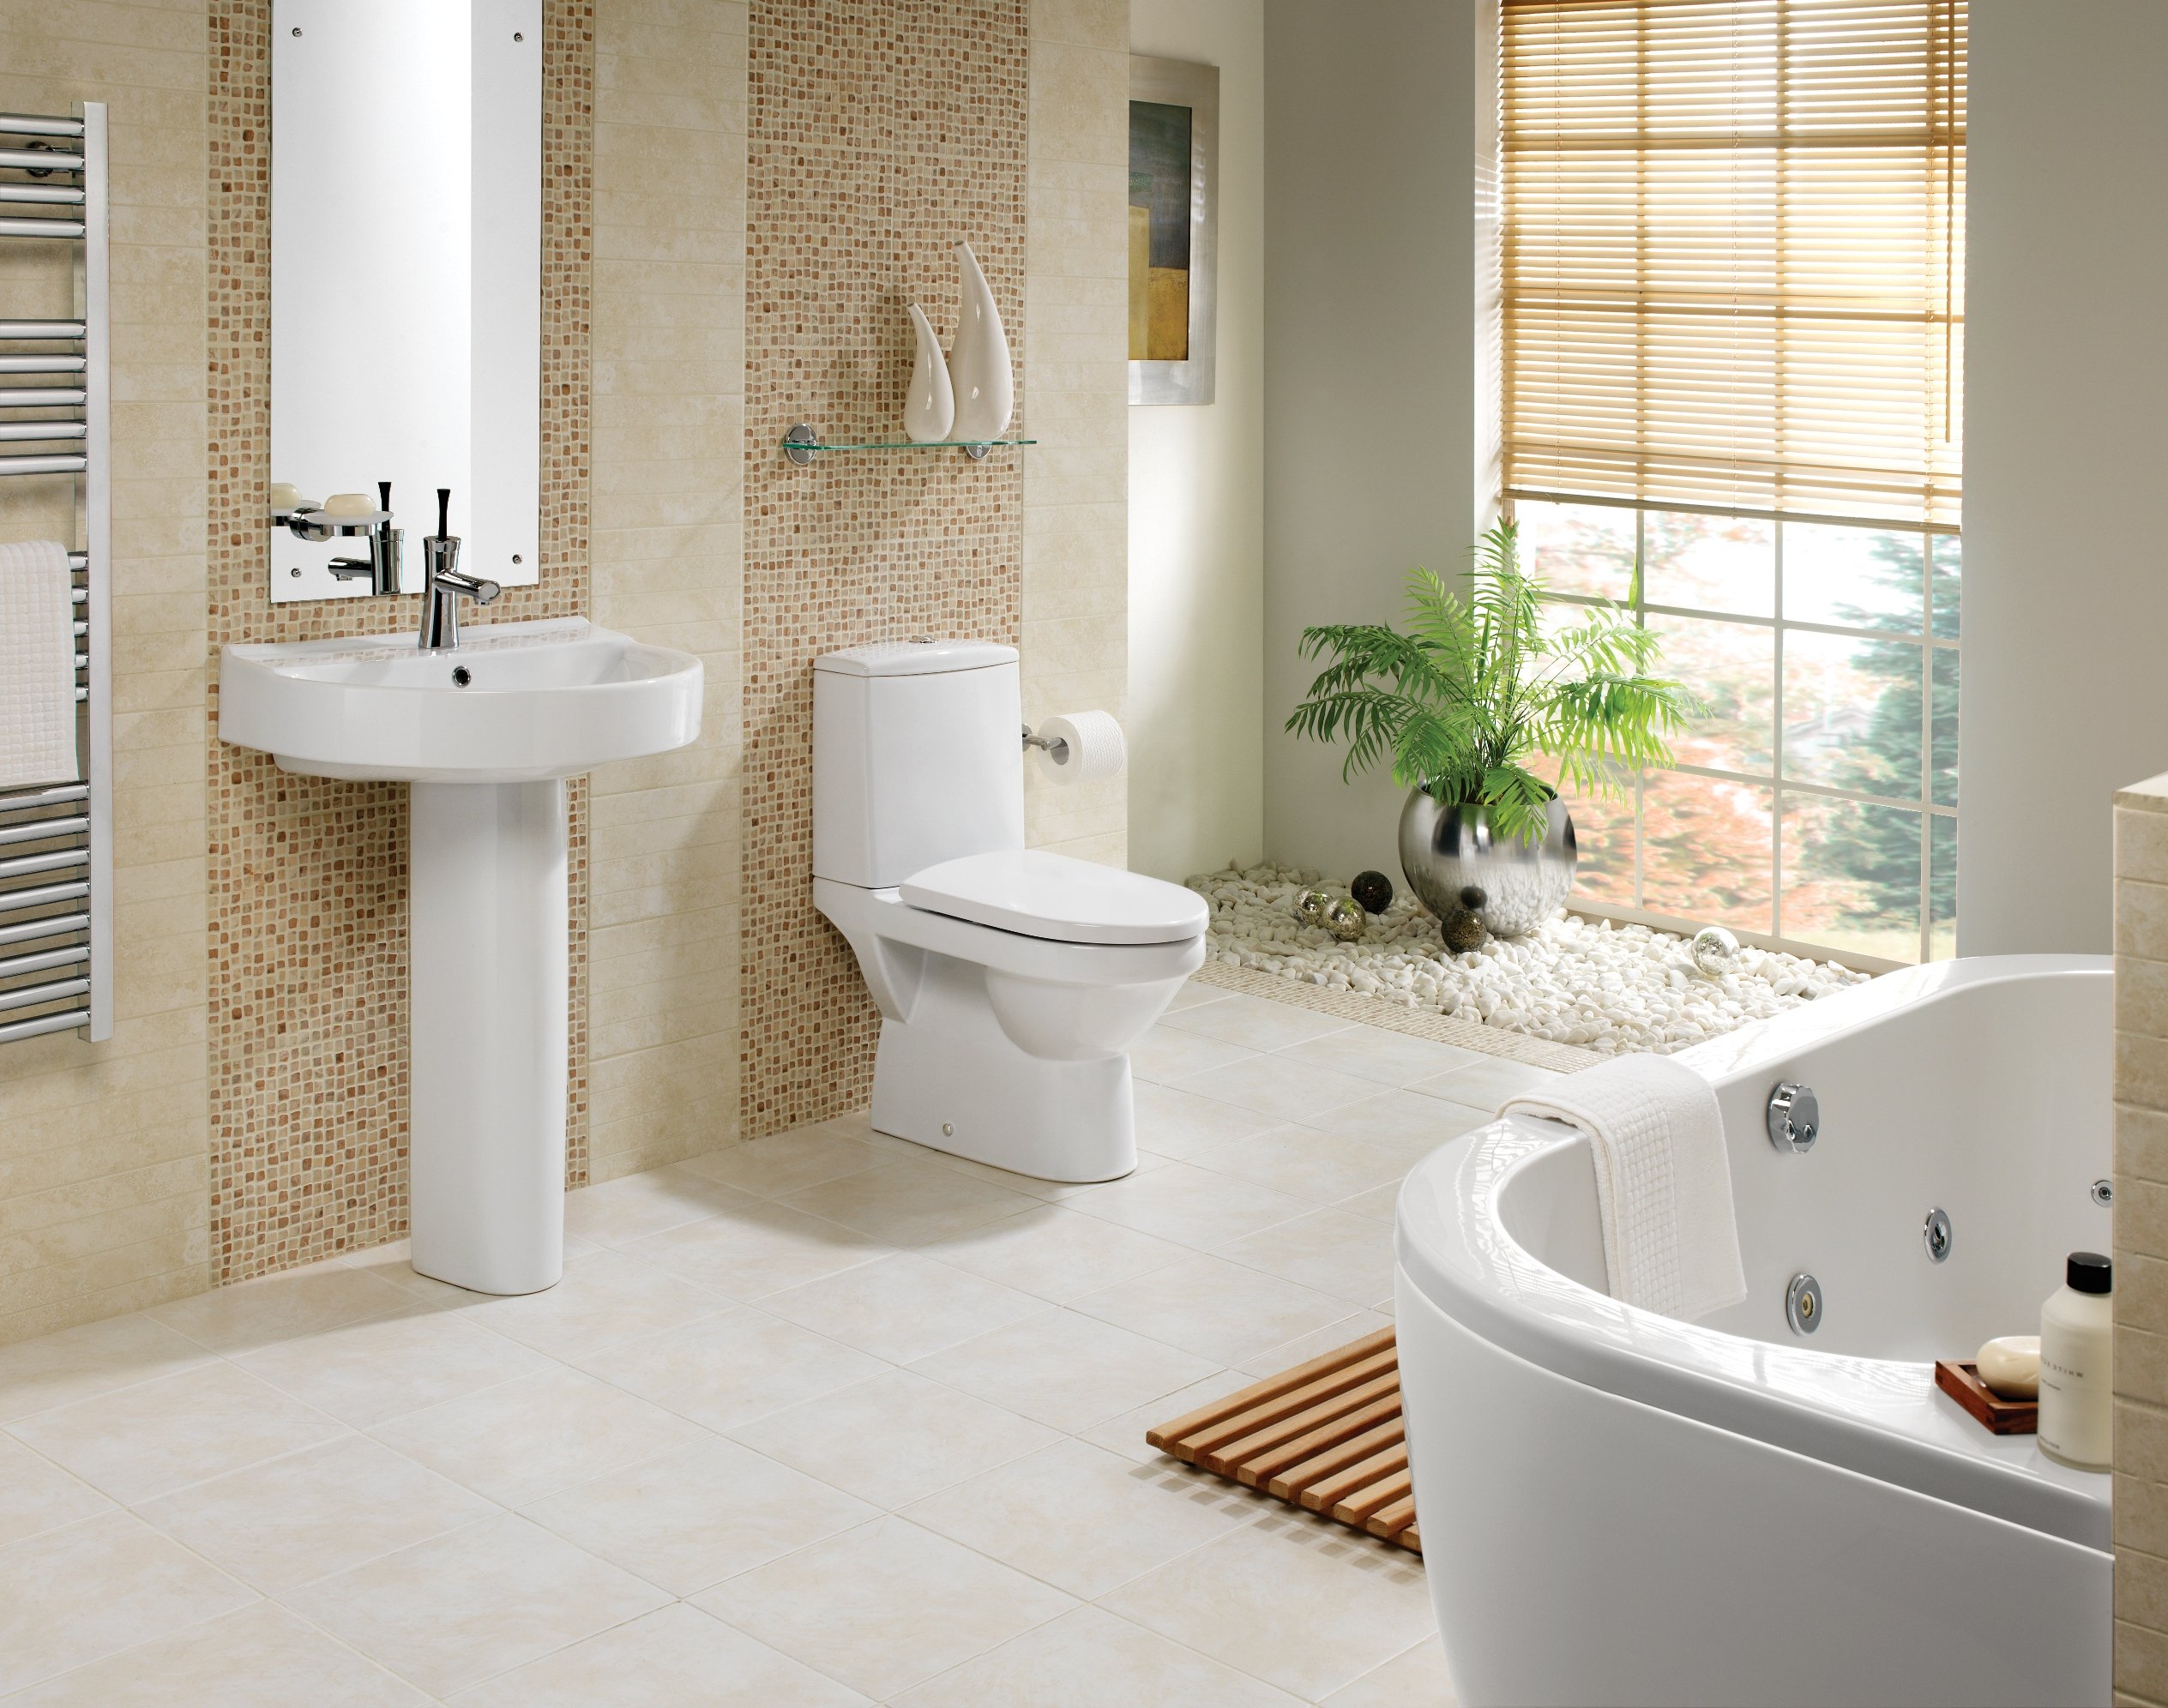 Exellent Simple White Bathrooms 25 Modern Bathroom Ideas For